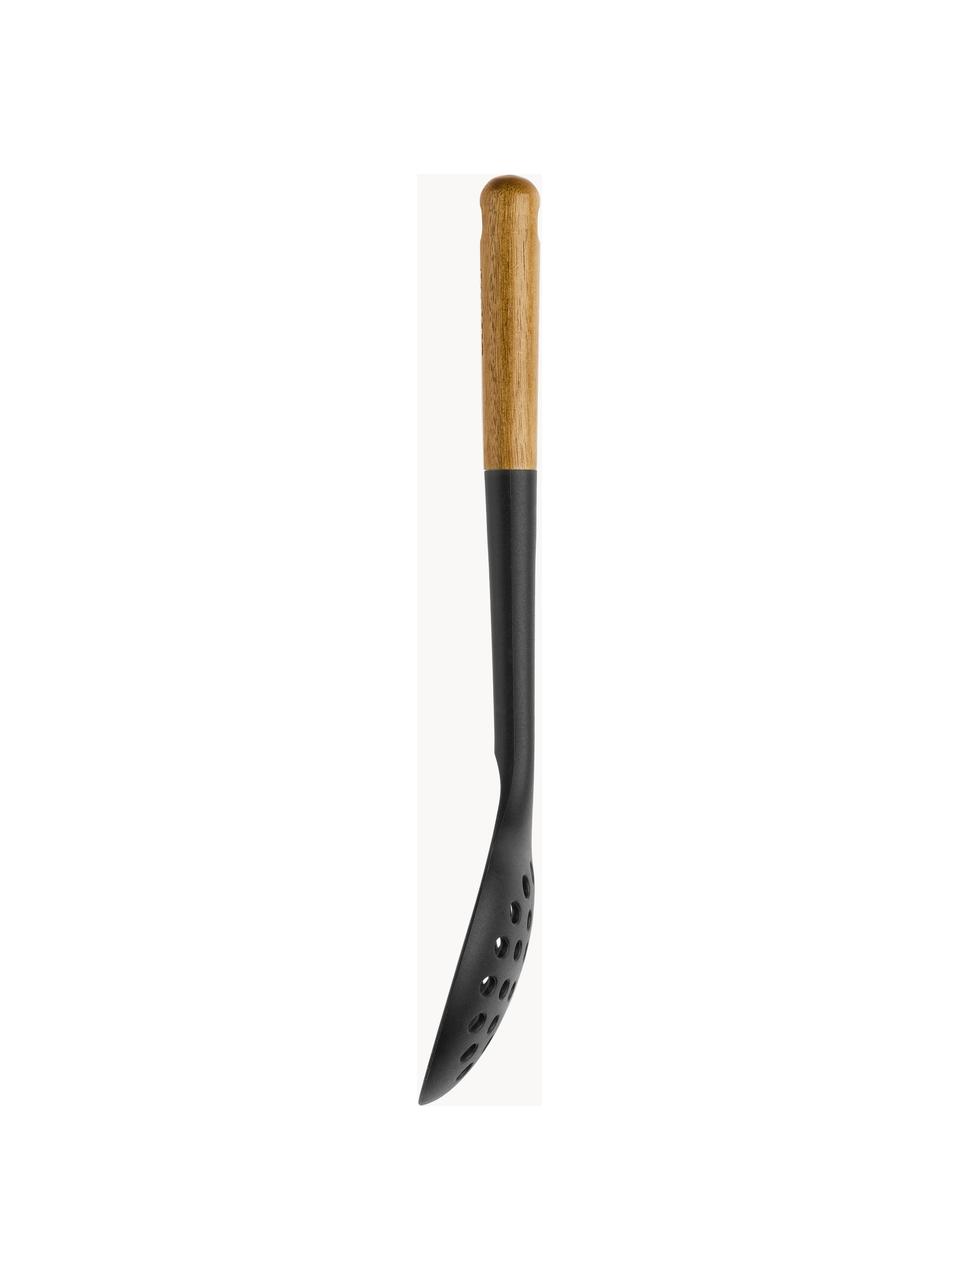 Děrovaná naběračka s rukojetí z akáciového dřeva Cook, Silikon, akáciové dřevo, Černá, akáciové dřevo, D 31 cm